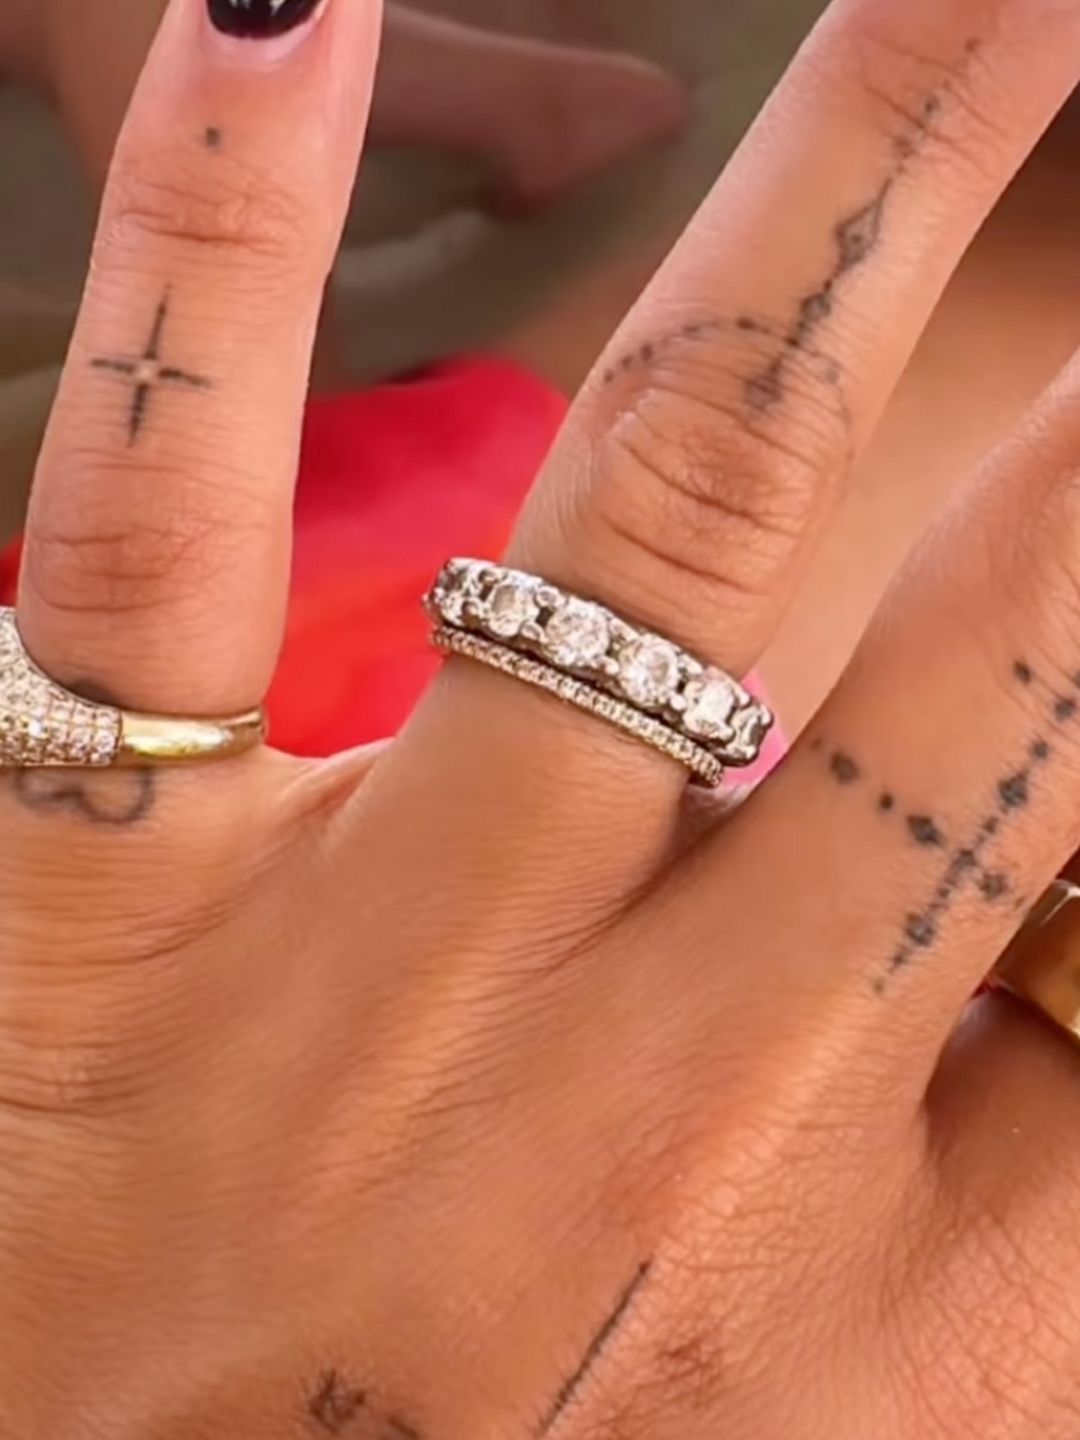 Rita Ora shared a glimpse of her diamond wedding band